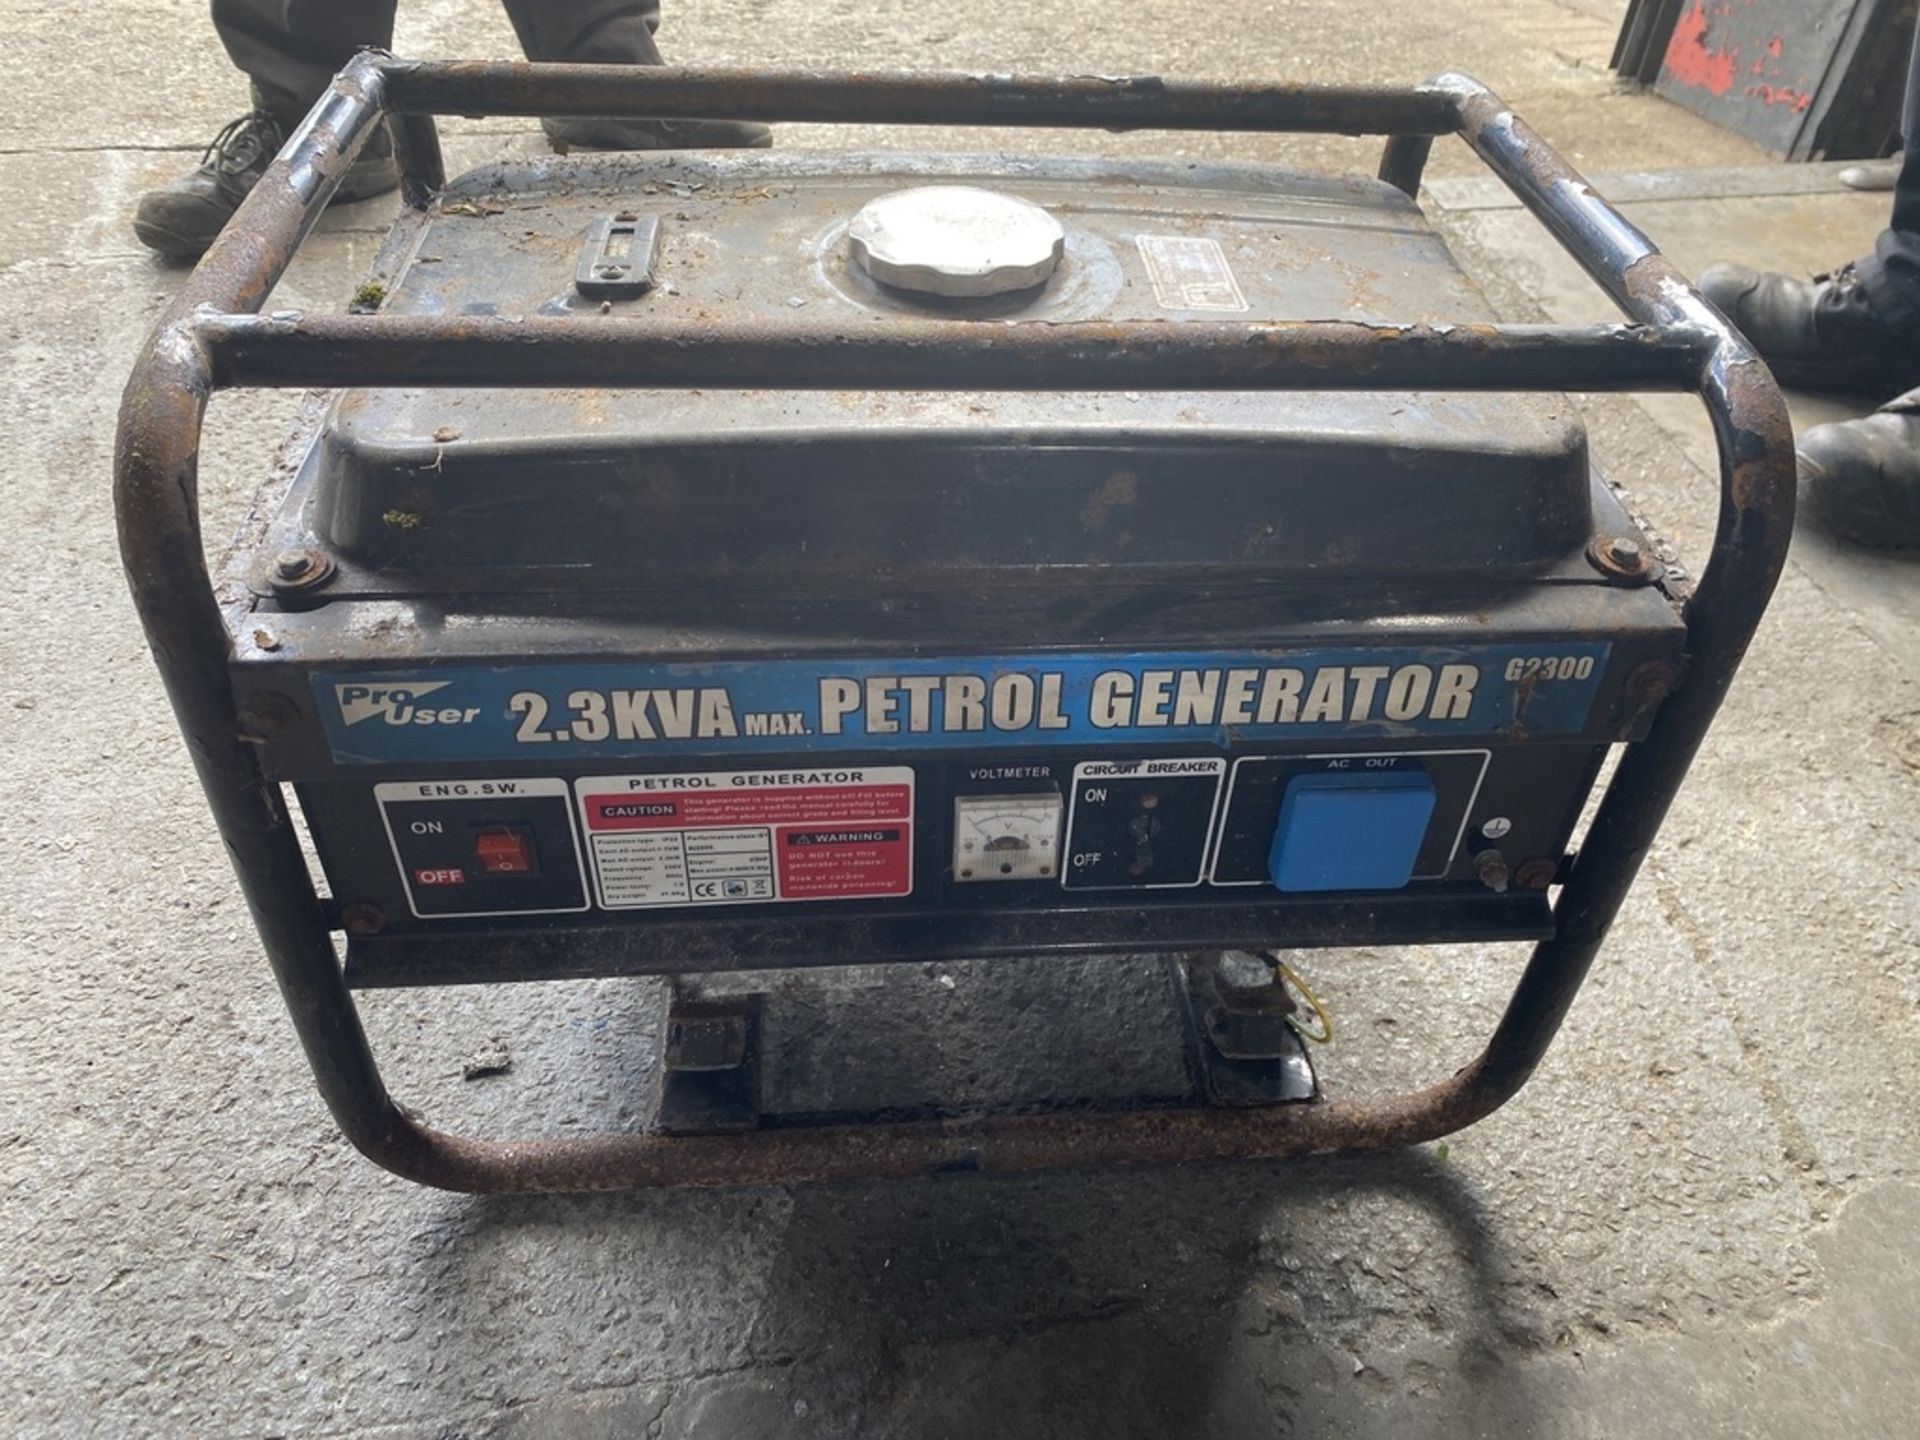 2.3Kw Petrol Generator - Pro User